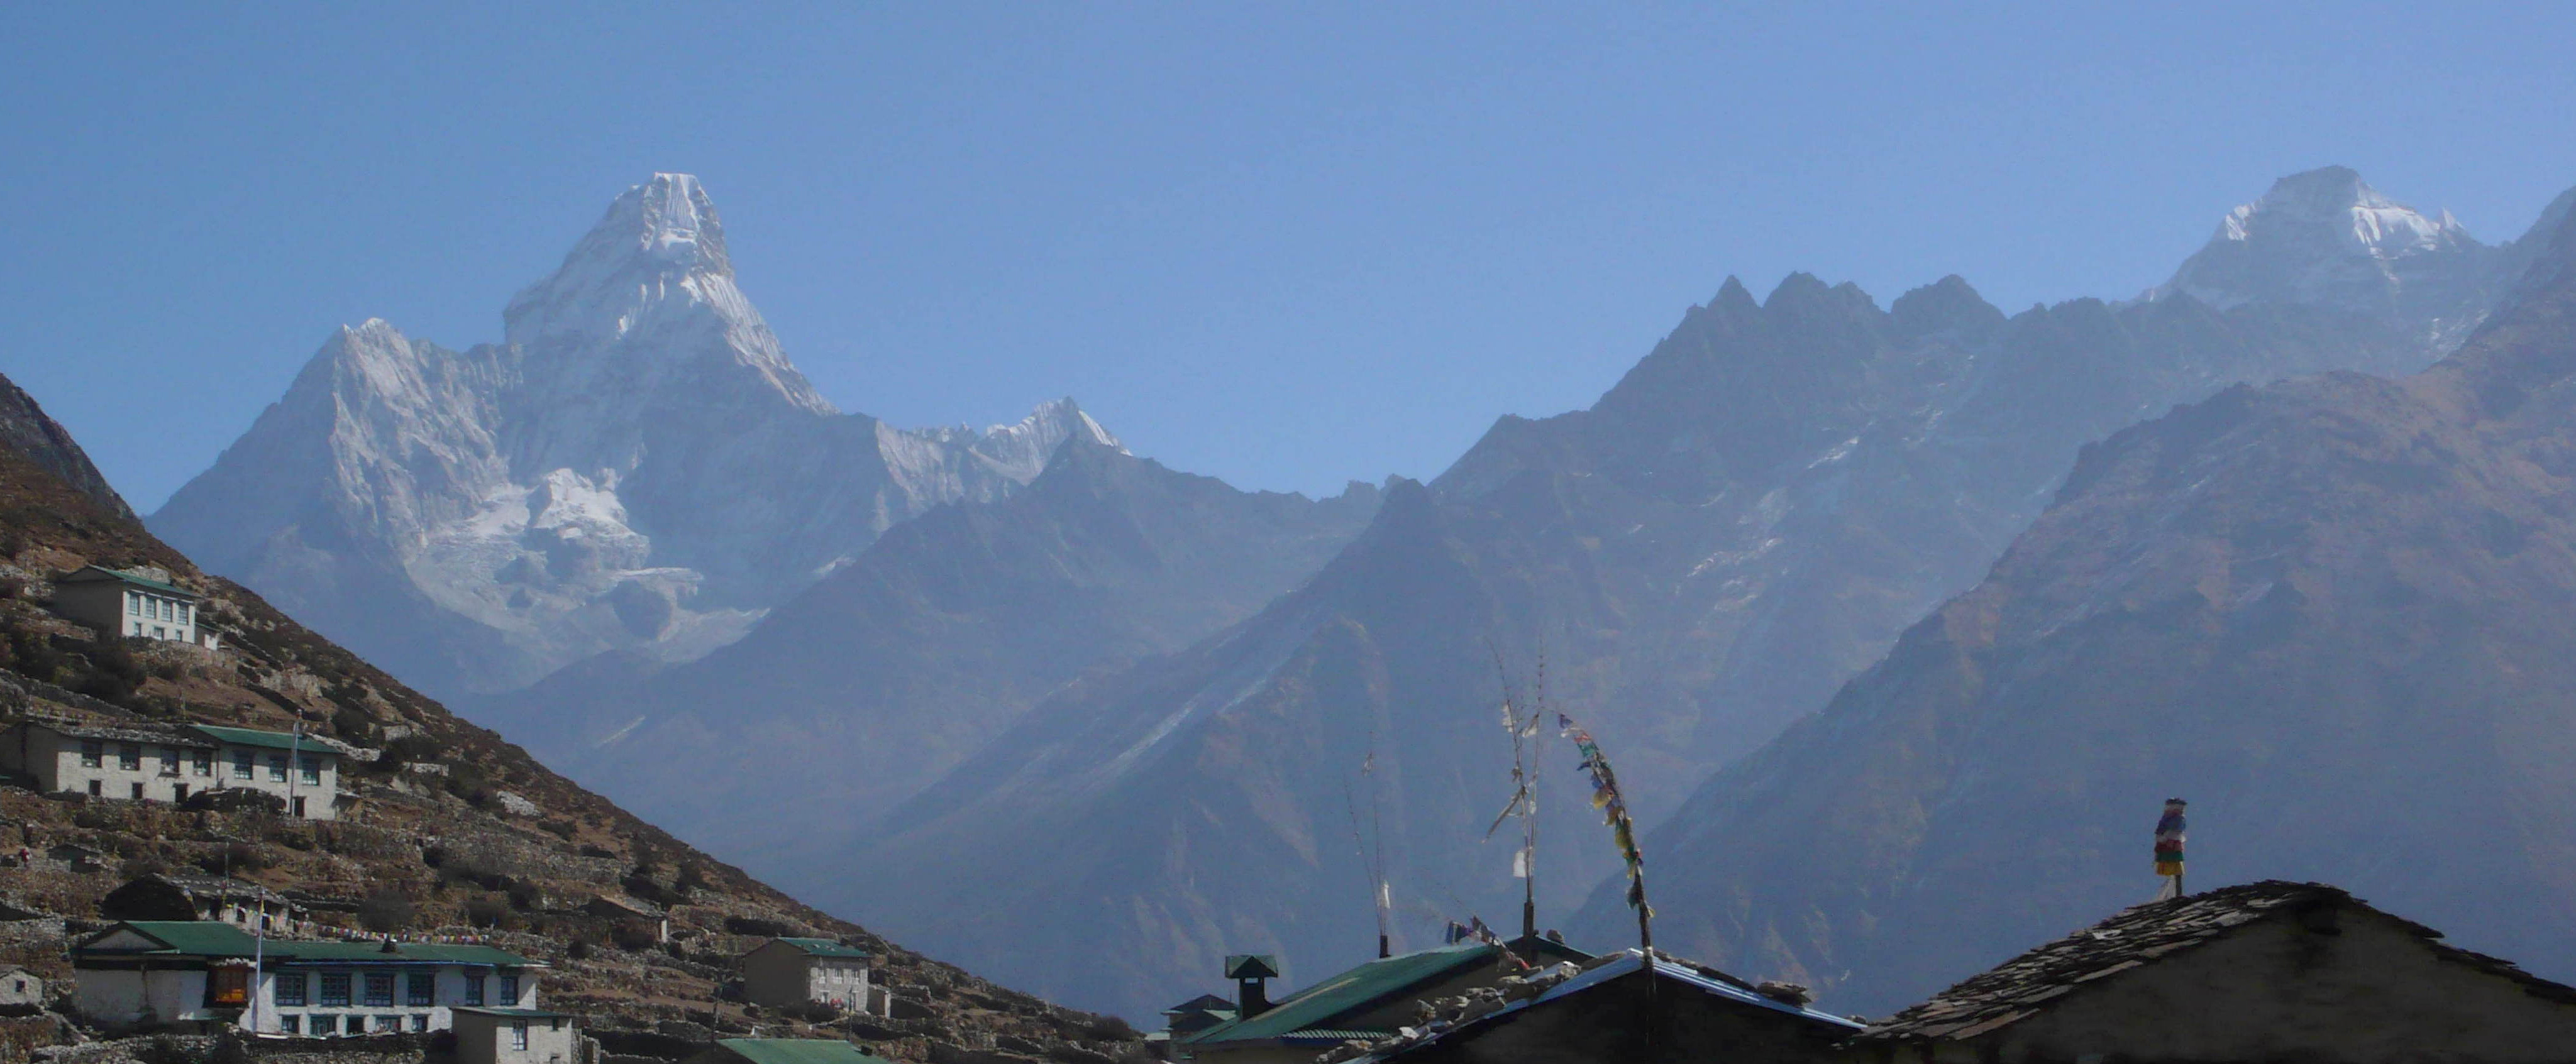 Trekking to Tengboche in the Everest region